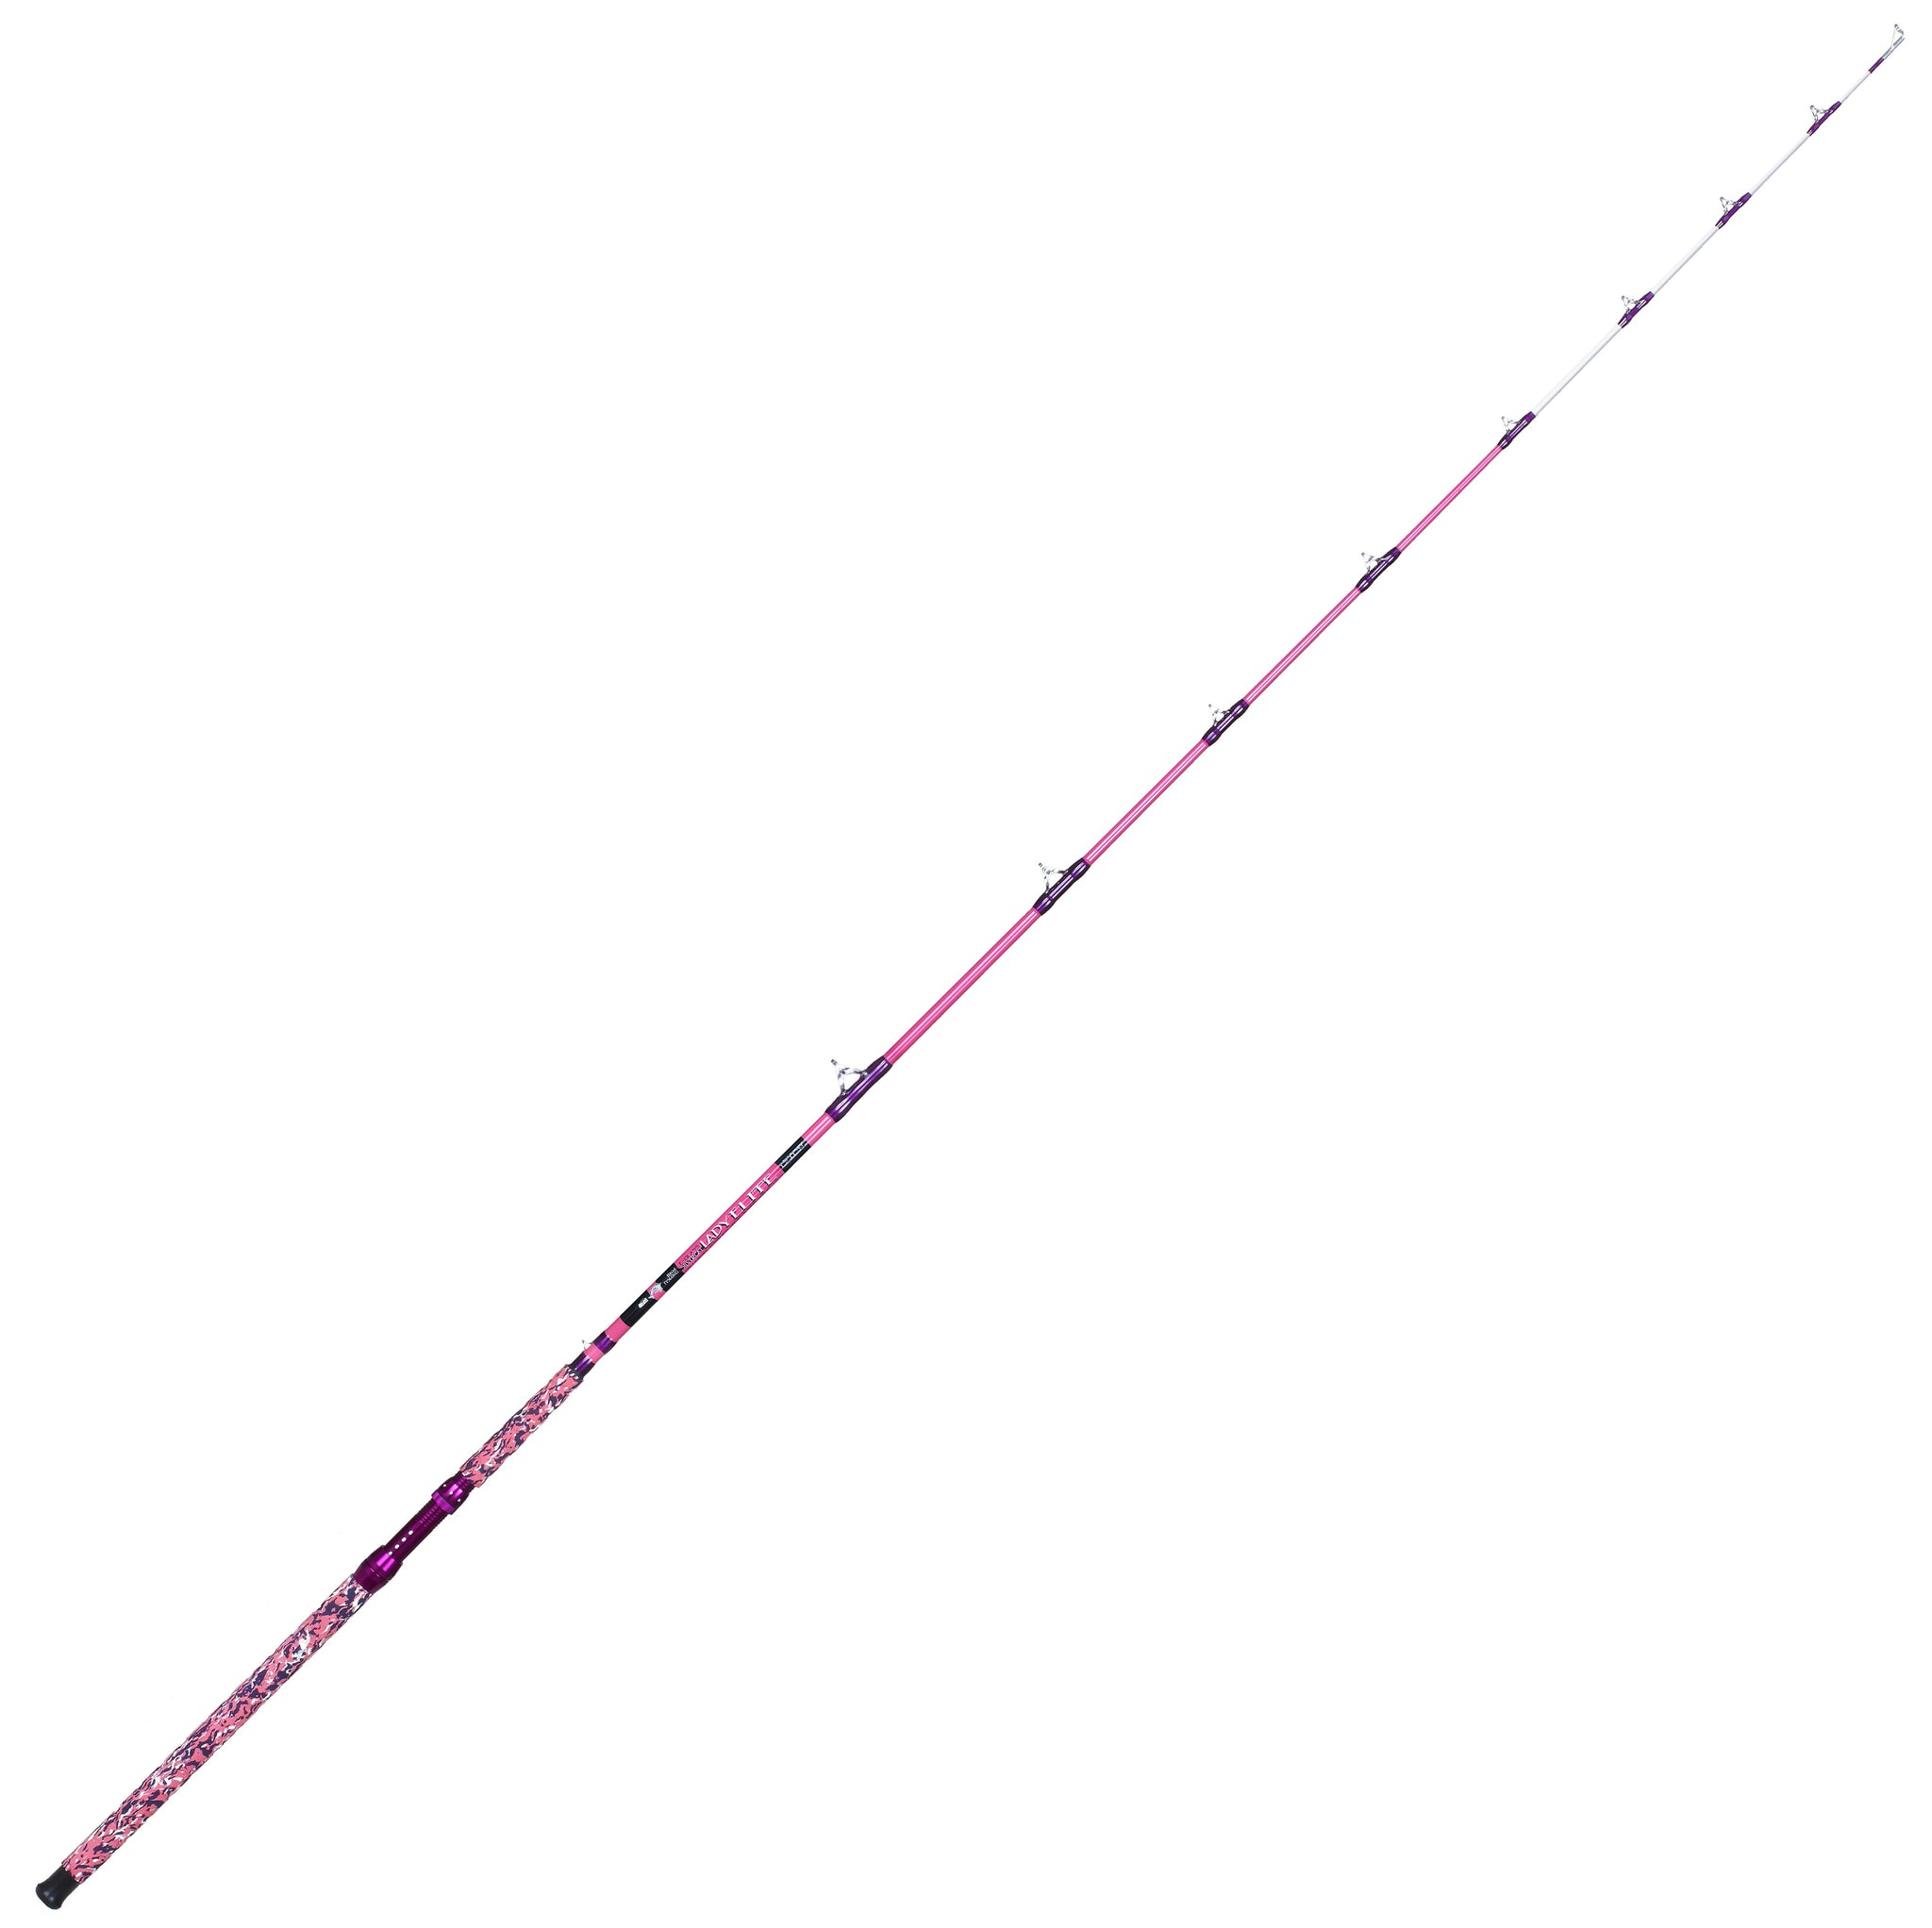 Catfish Gear - B'n'M Pole Company